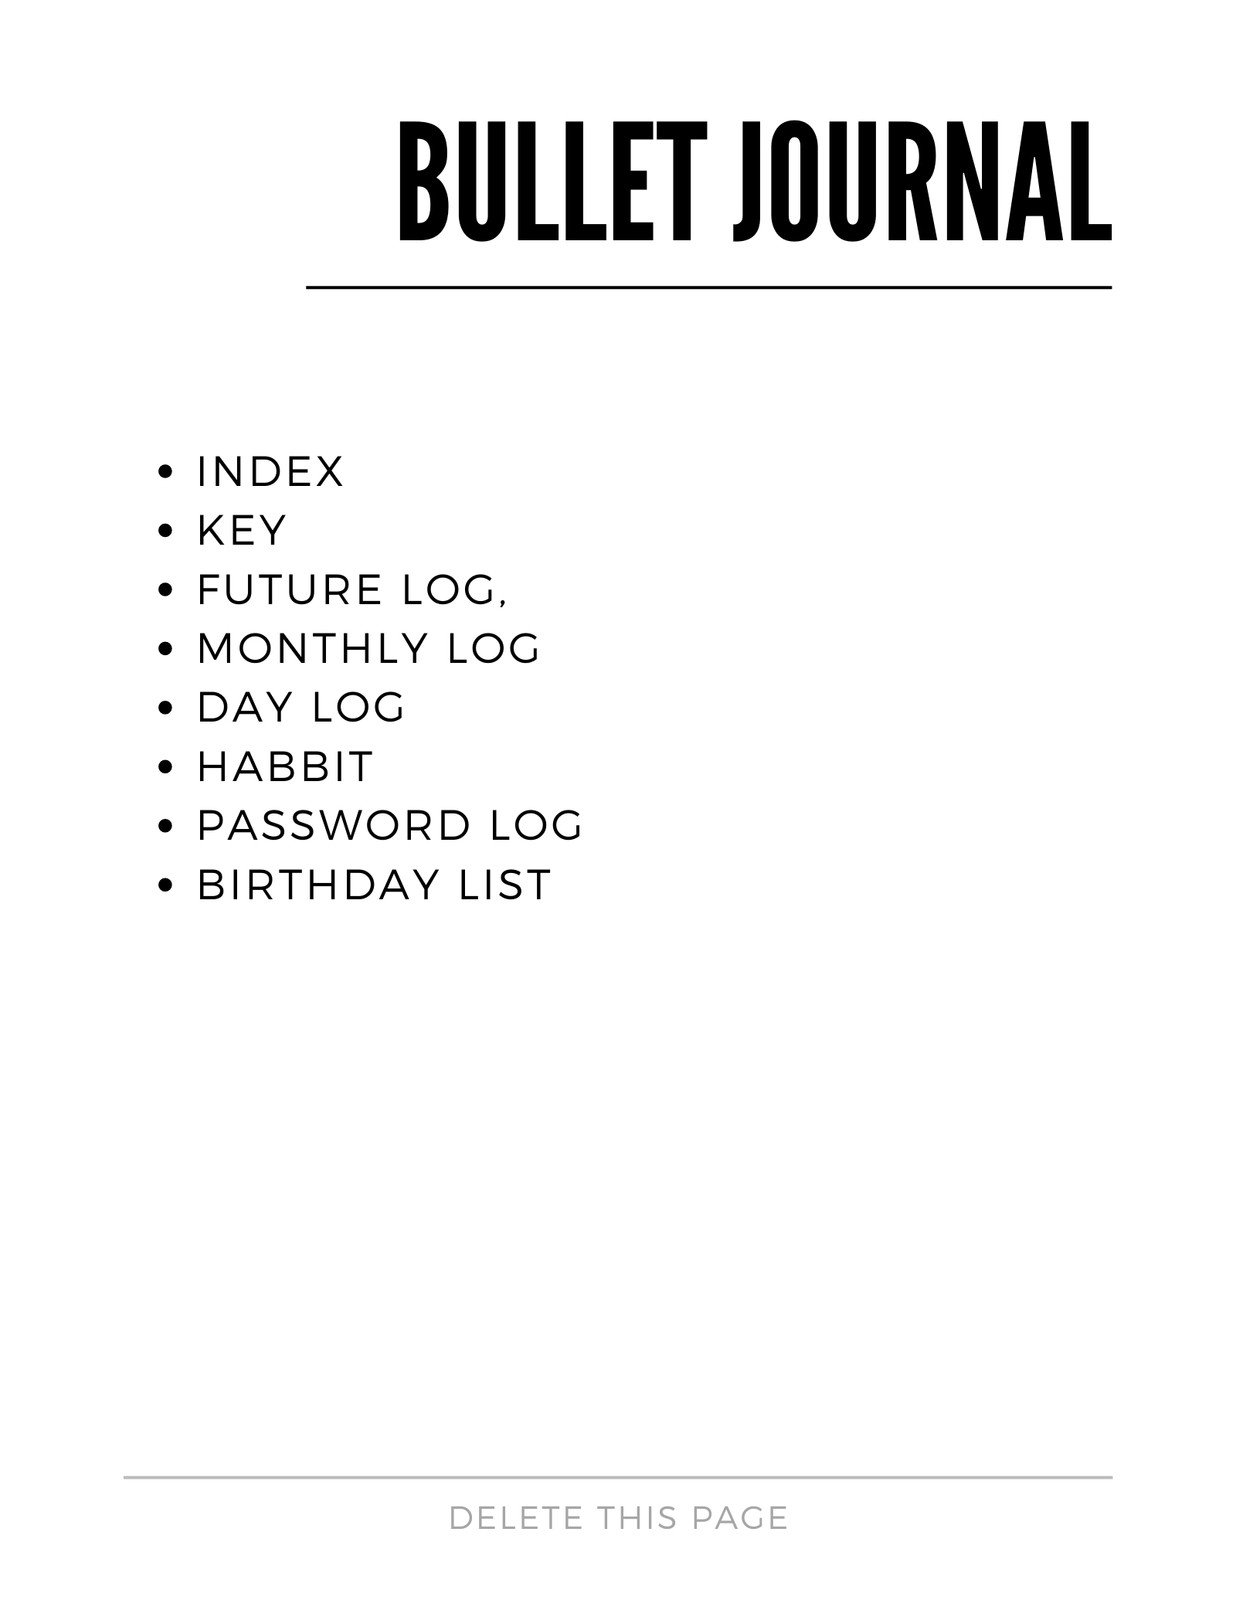 50+ FREE Bullet Journal Printables